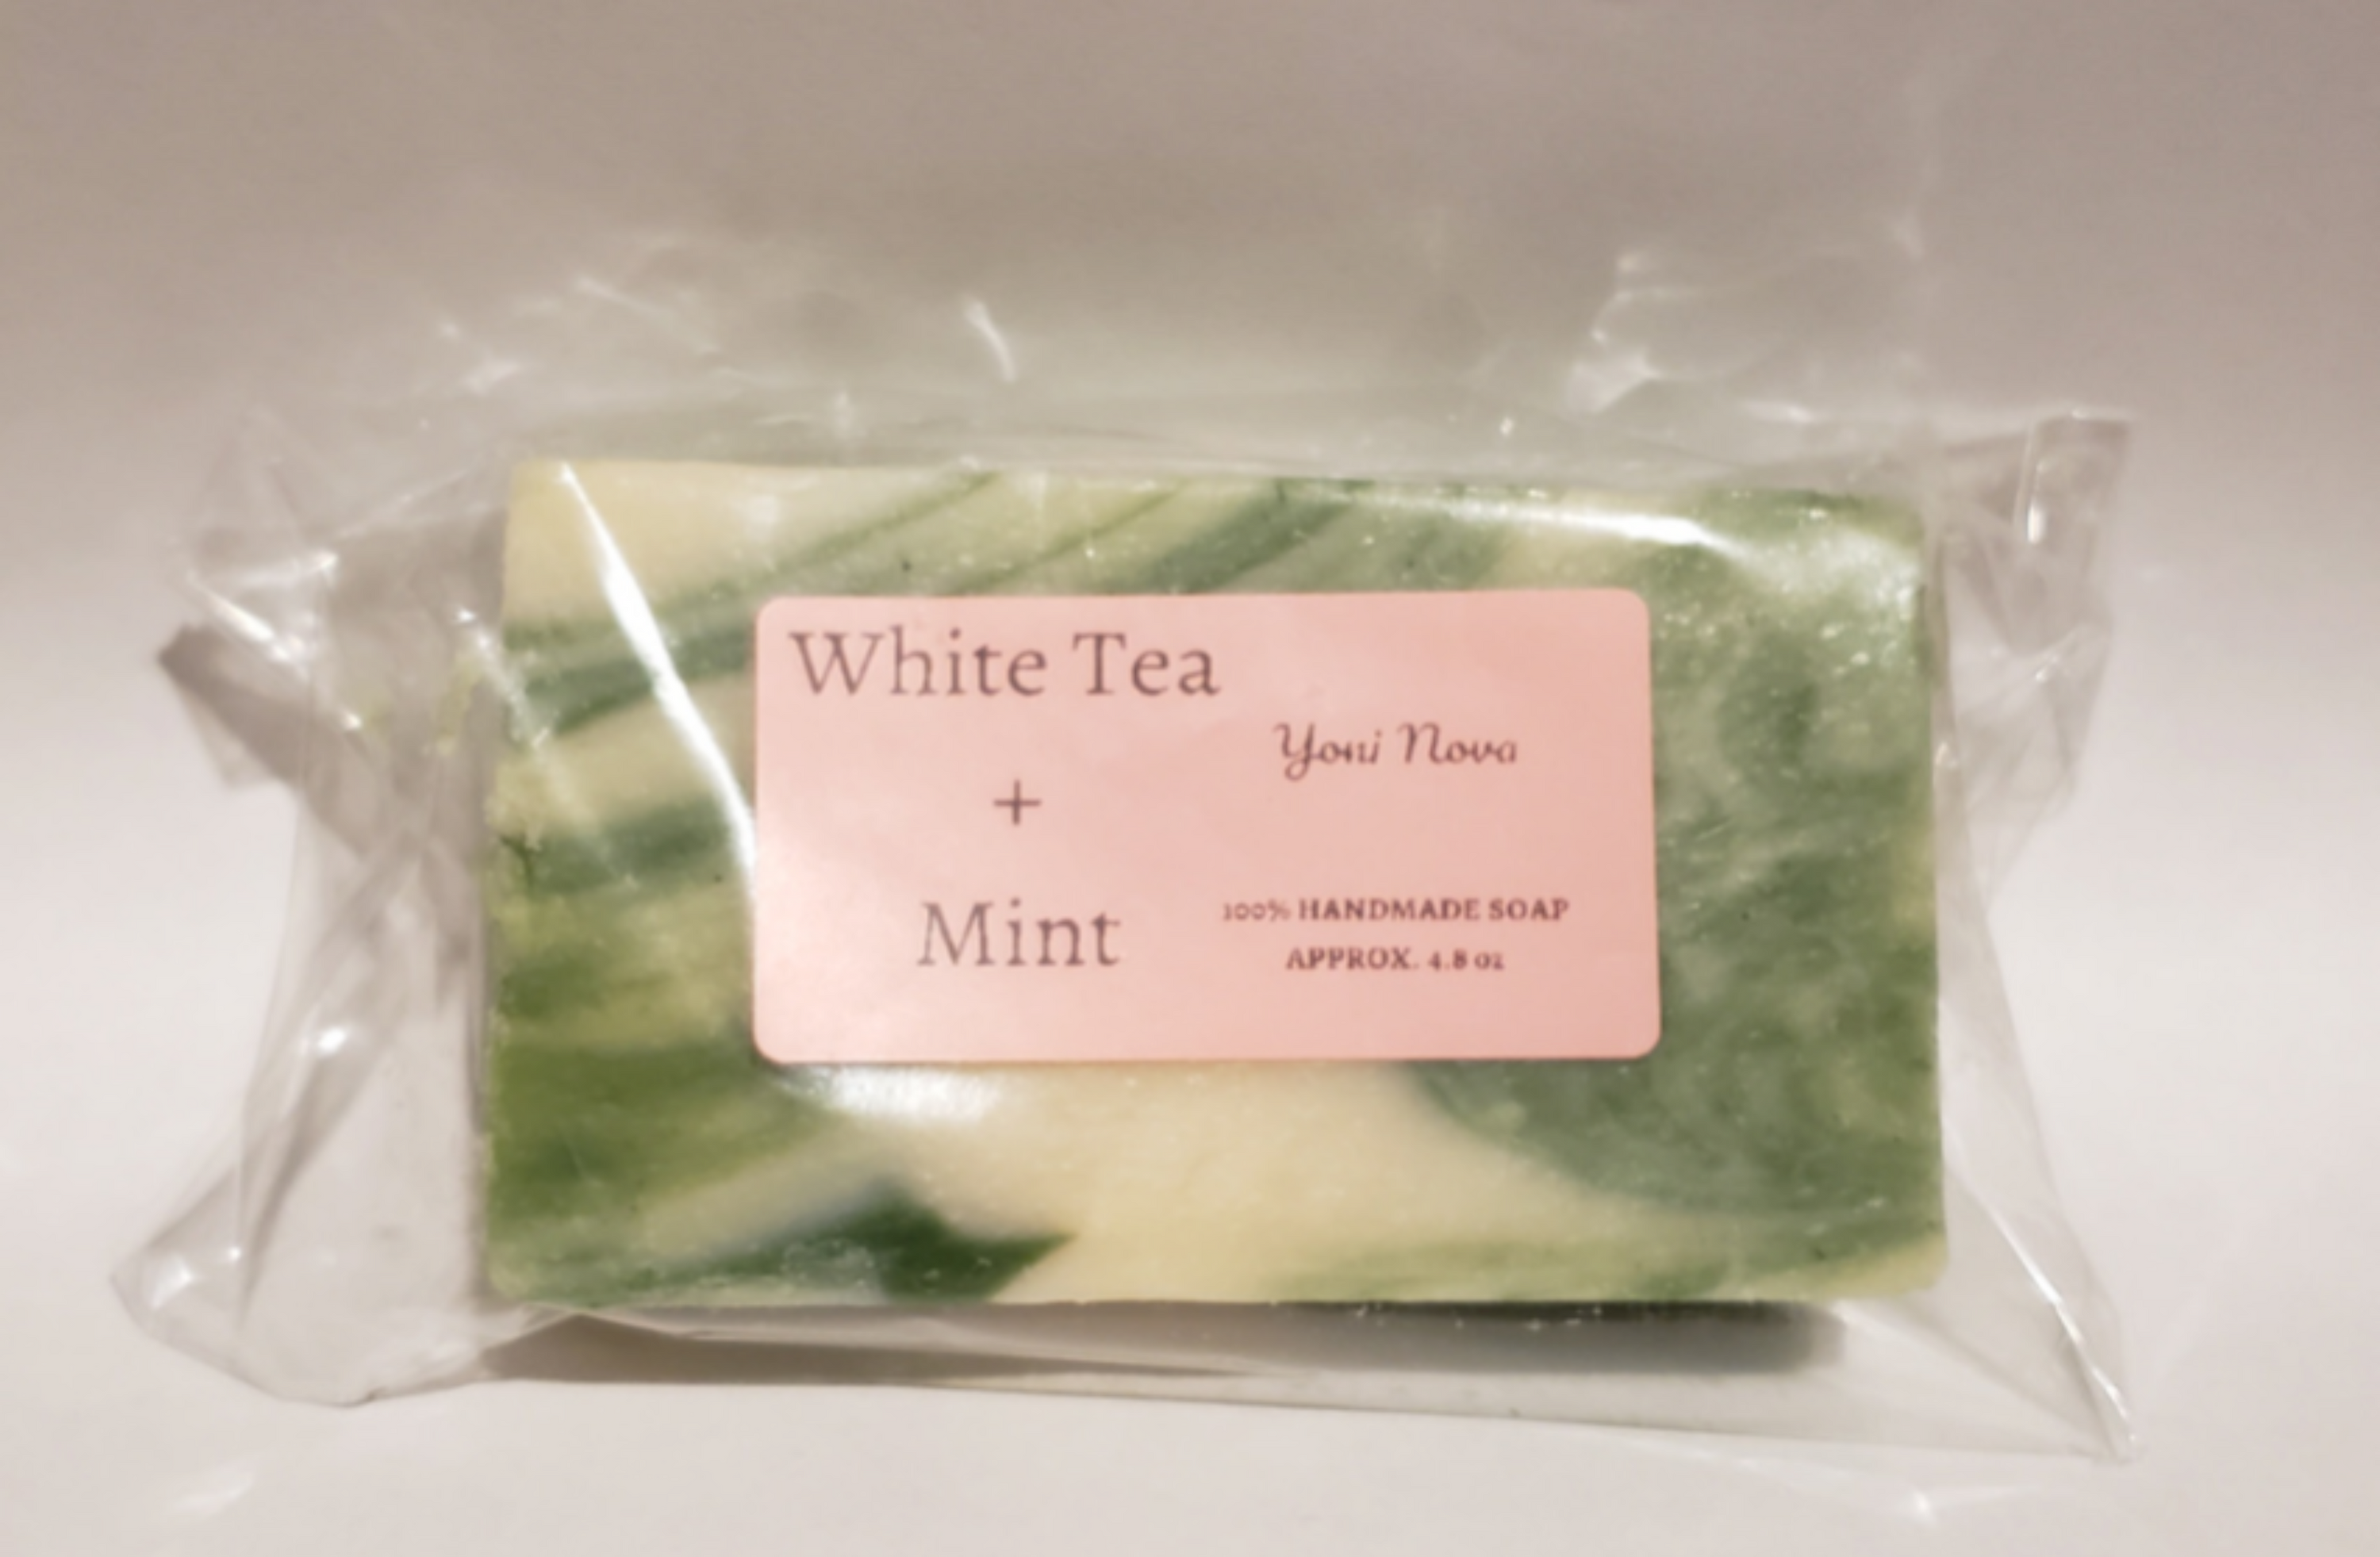 White Tea and Mint Body Bar